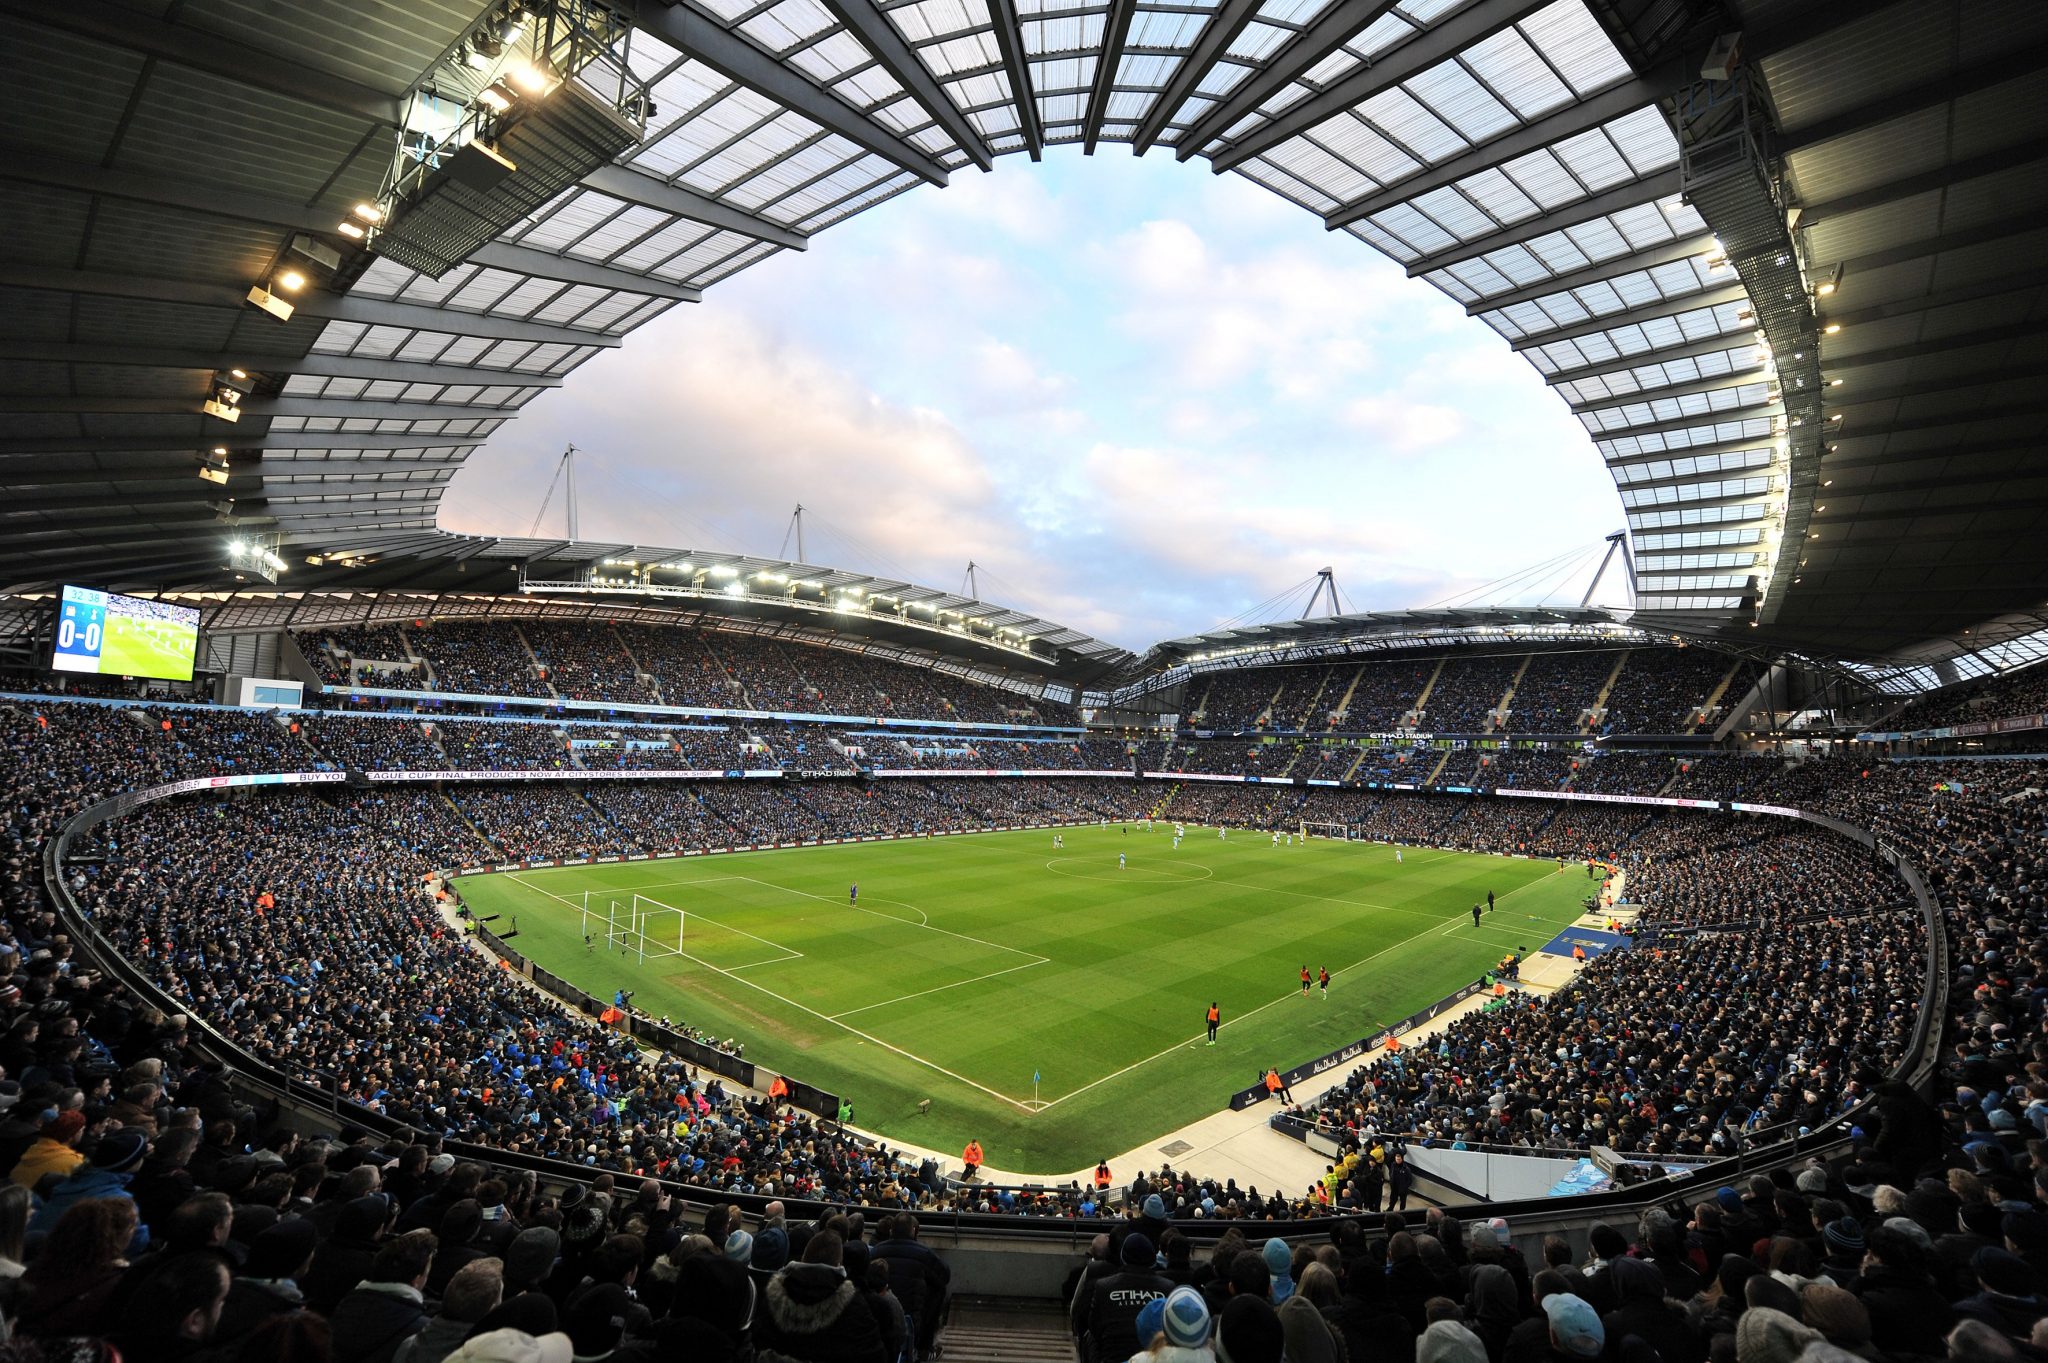 Pphoto of Manchester City Football Club's Etihad Stadium